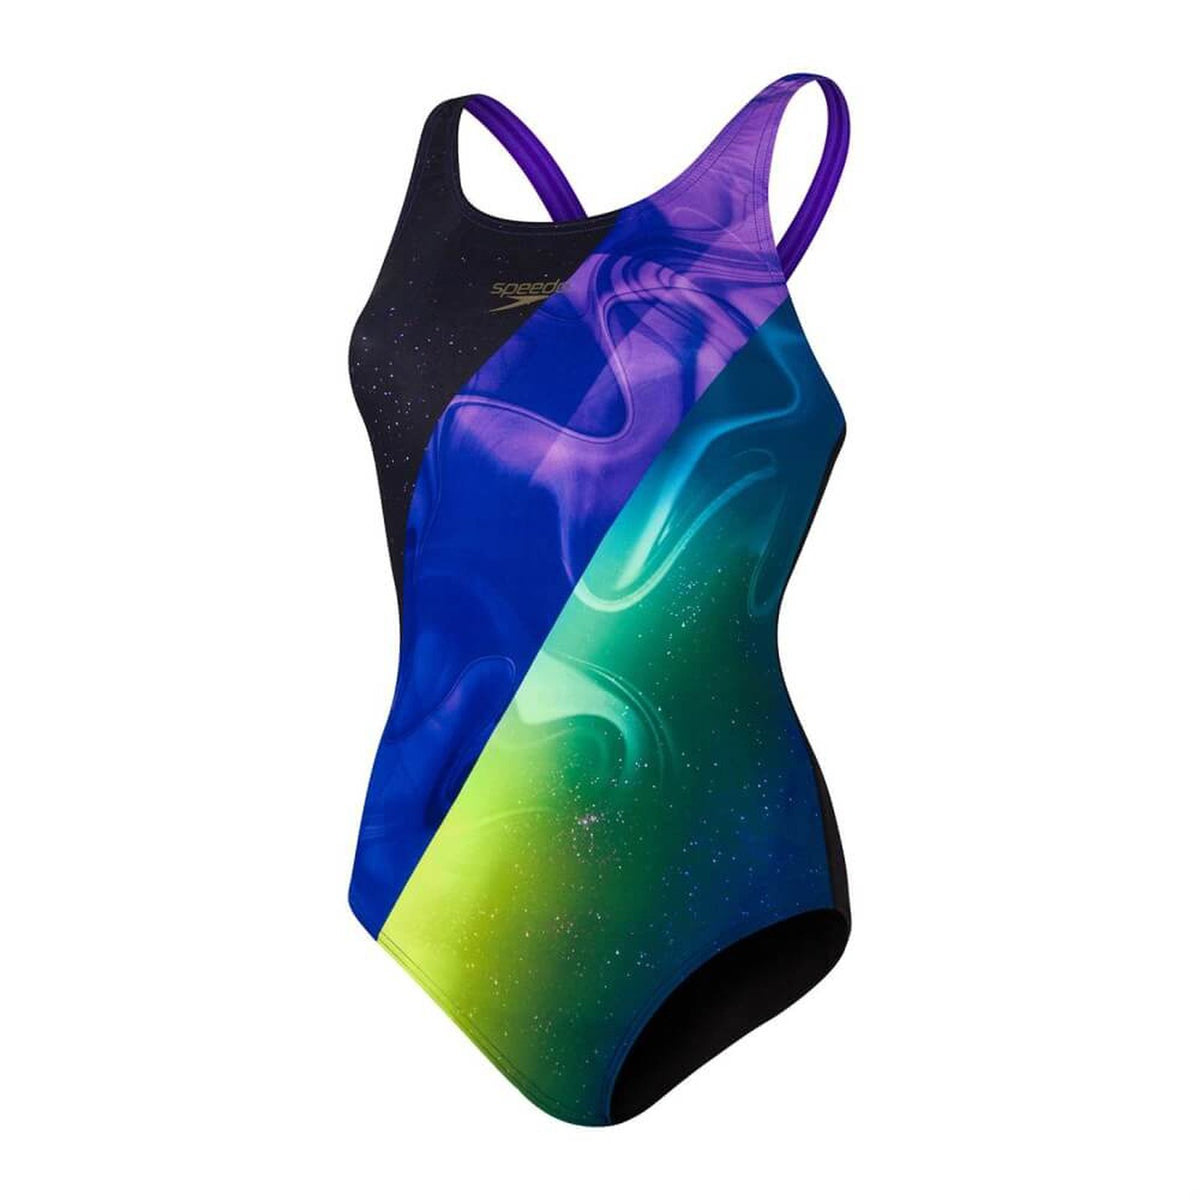 Speedo Women's Placement Digital Medalist Swimsuit - Black/Purple